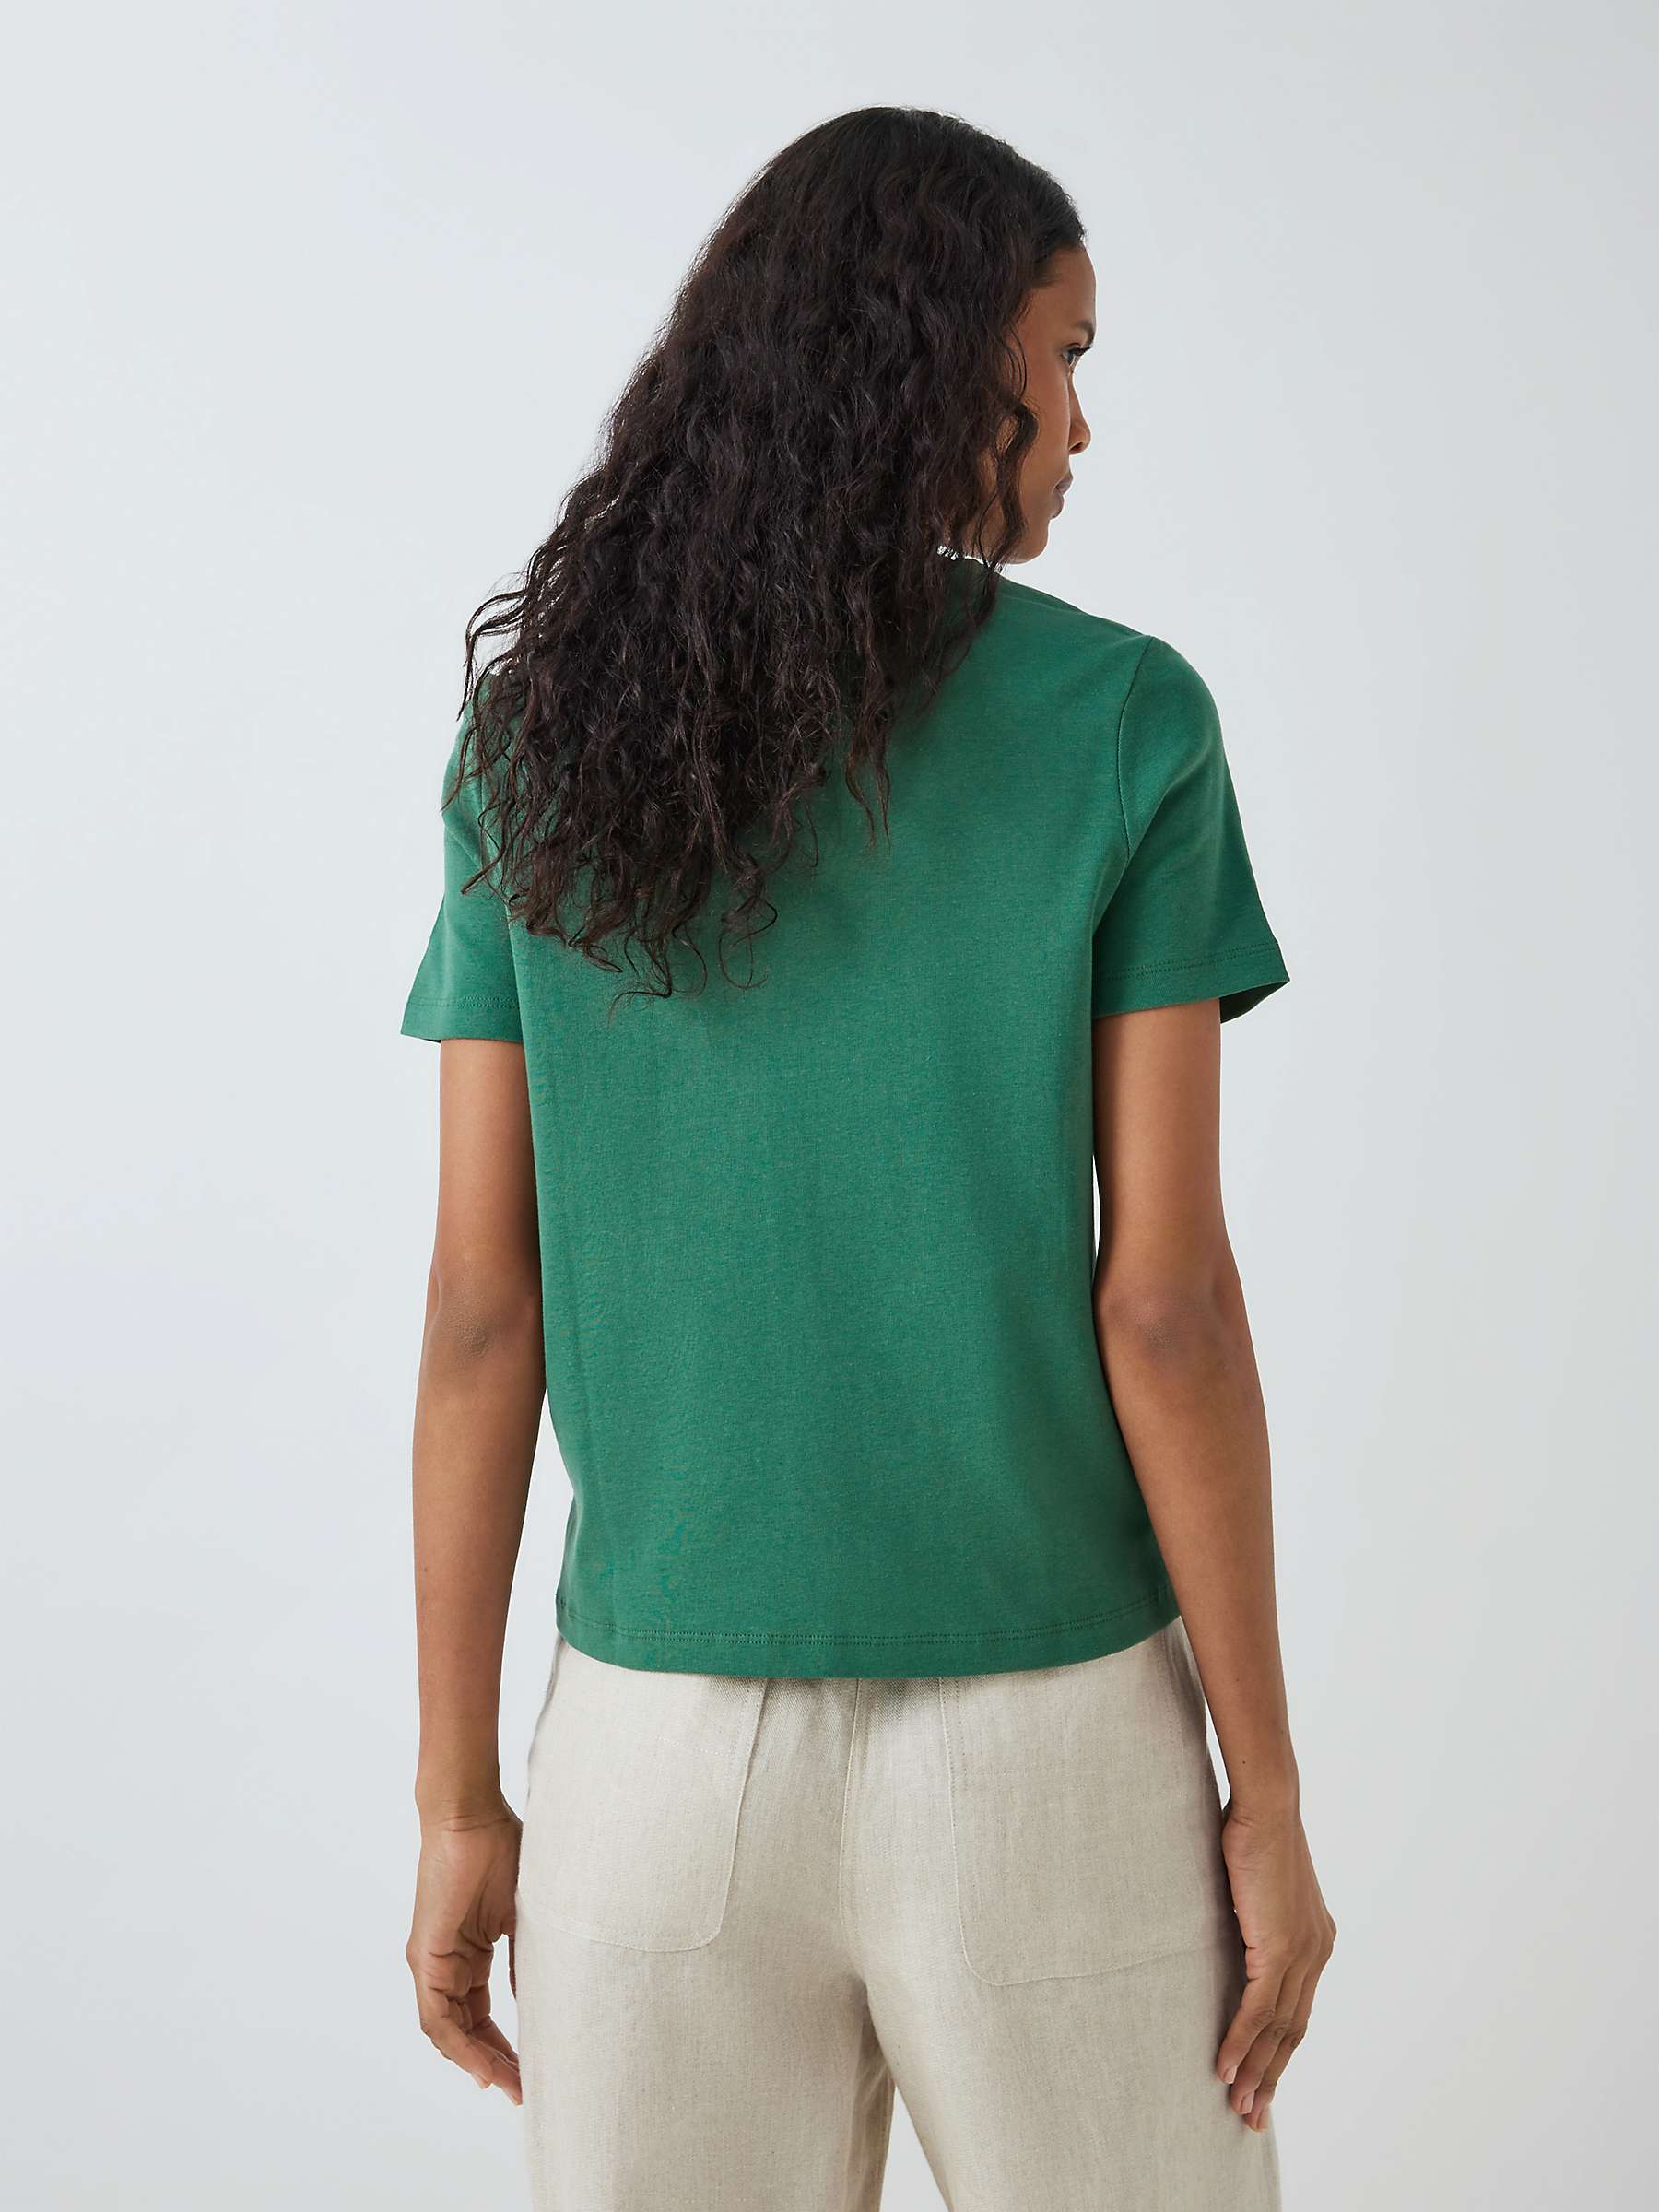 Buy John Lewis Organic Cotton Short Sleeve Crew Neck T-Shirt Online at johnlewis.com